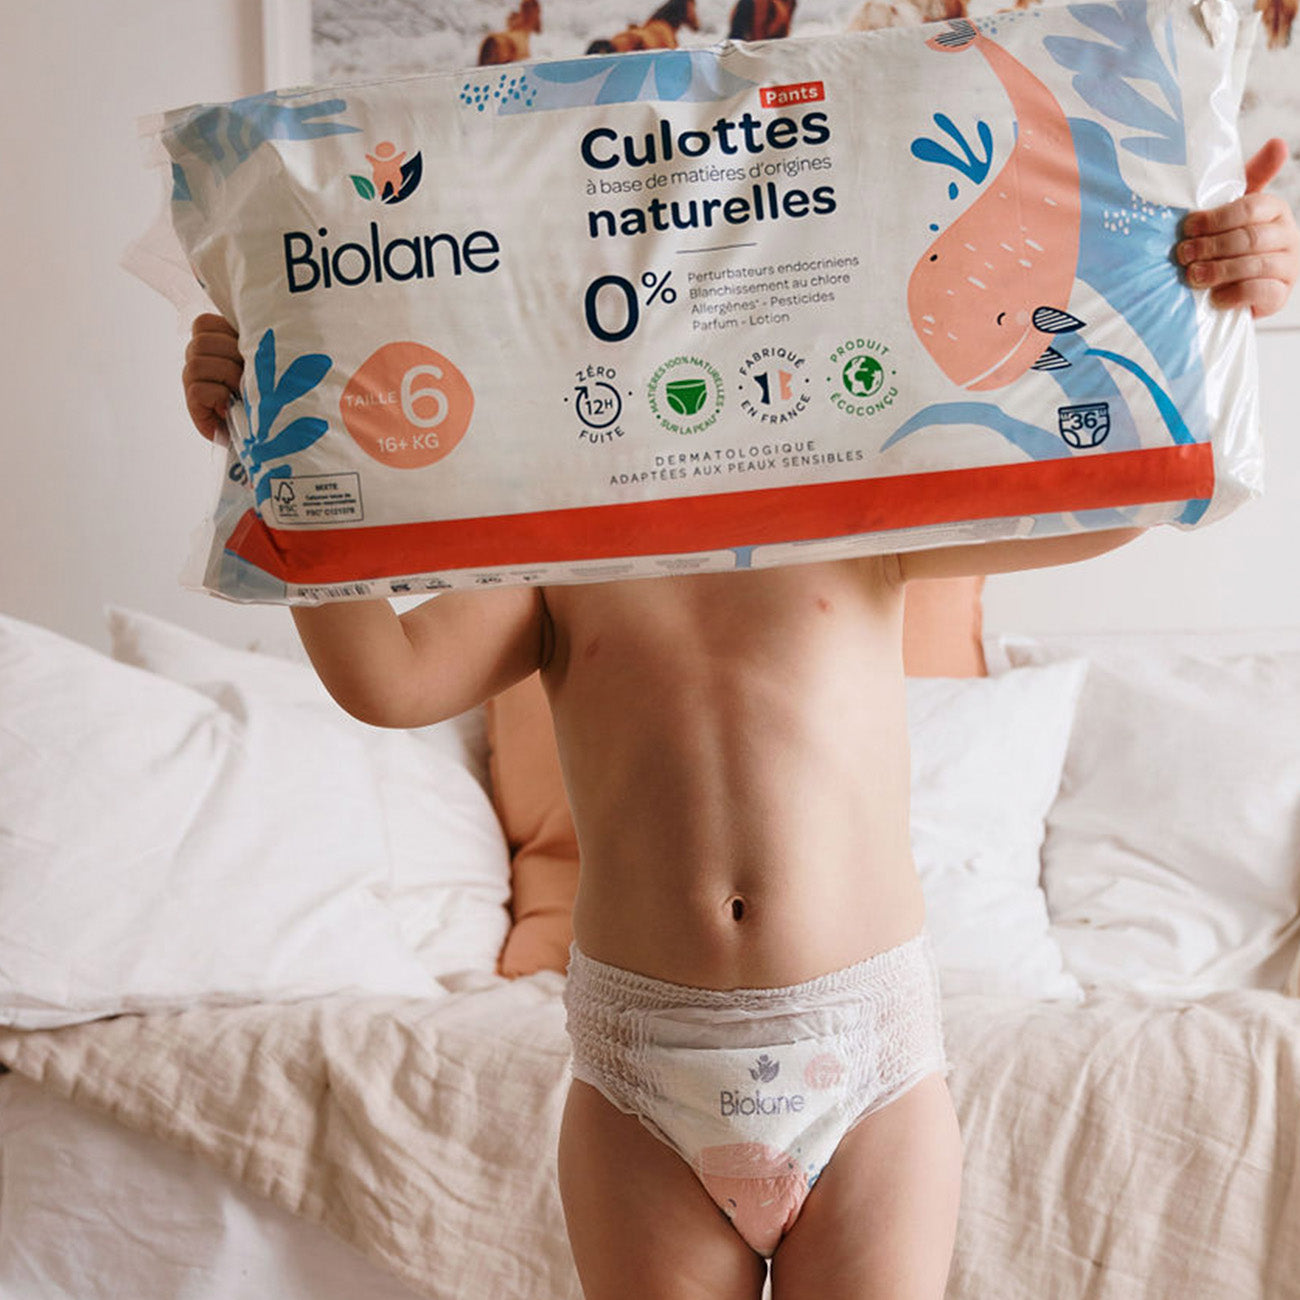 Biolane Couches Culottes Taille 6 - 36 couches - Pharmacie en ligne